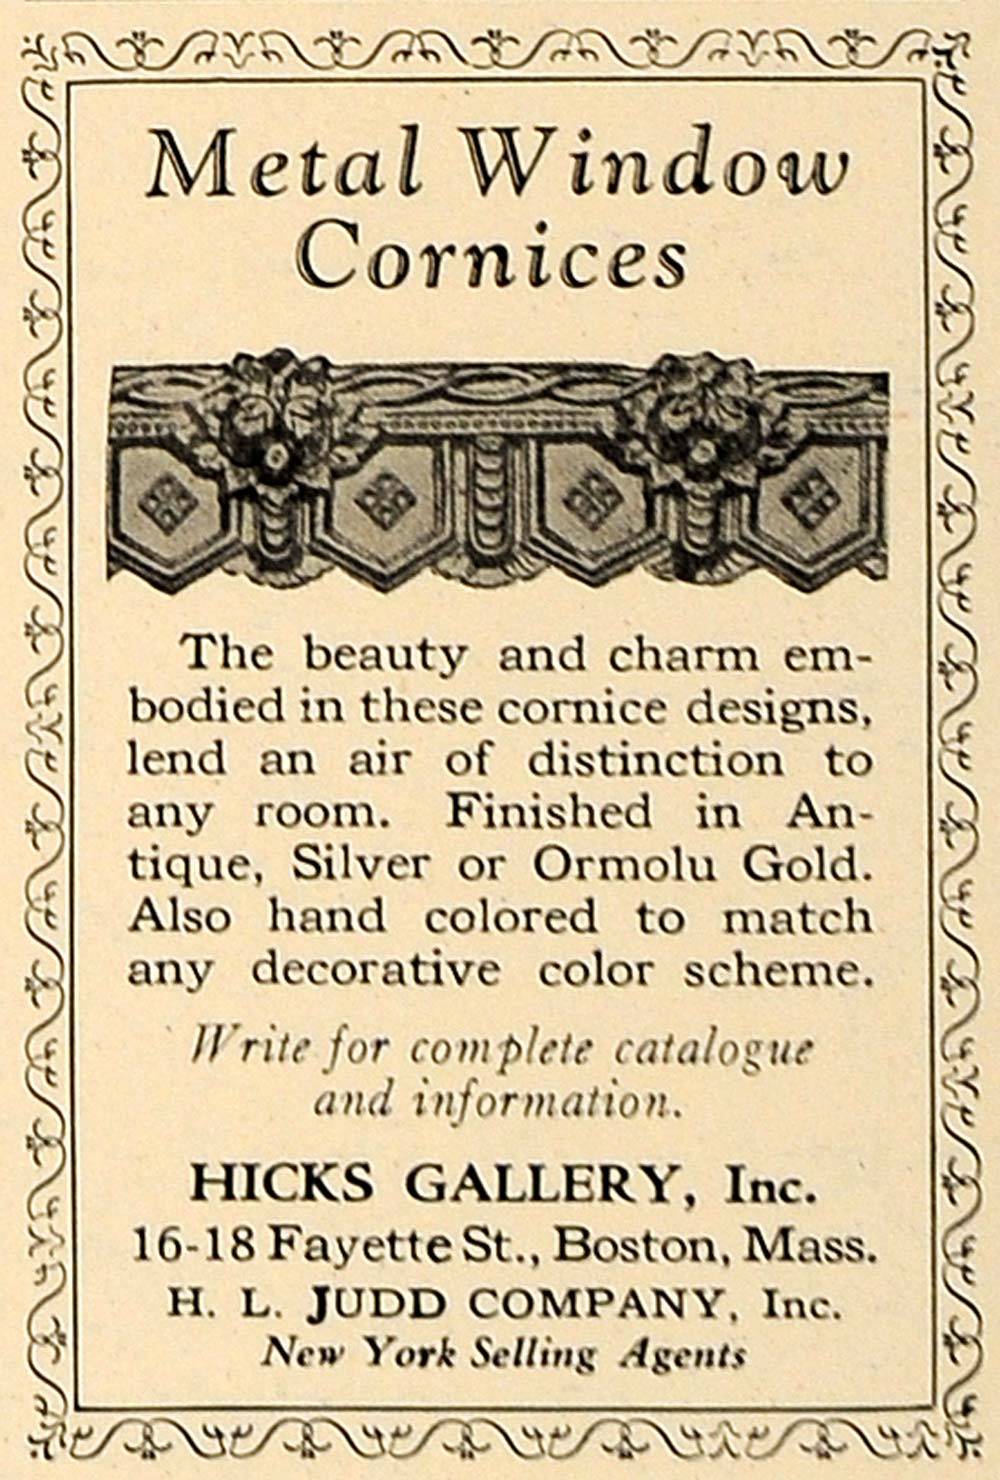 1928 Ad Hicks Gallery Metal Window Decorative Cornices - ORIGINAL CL8